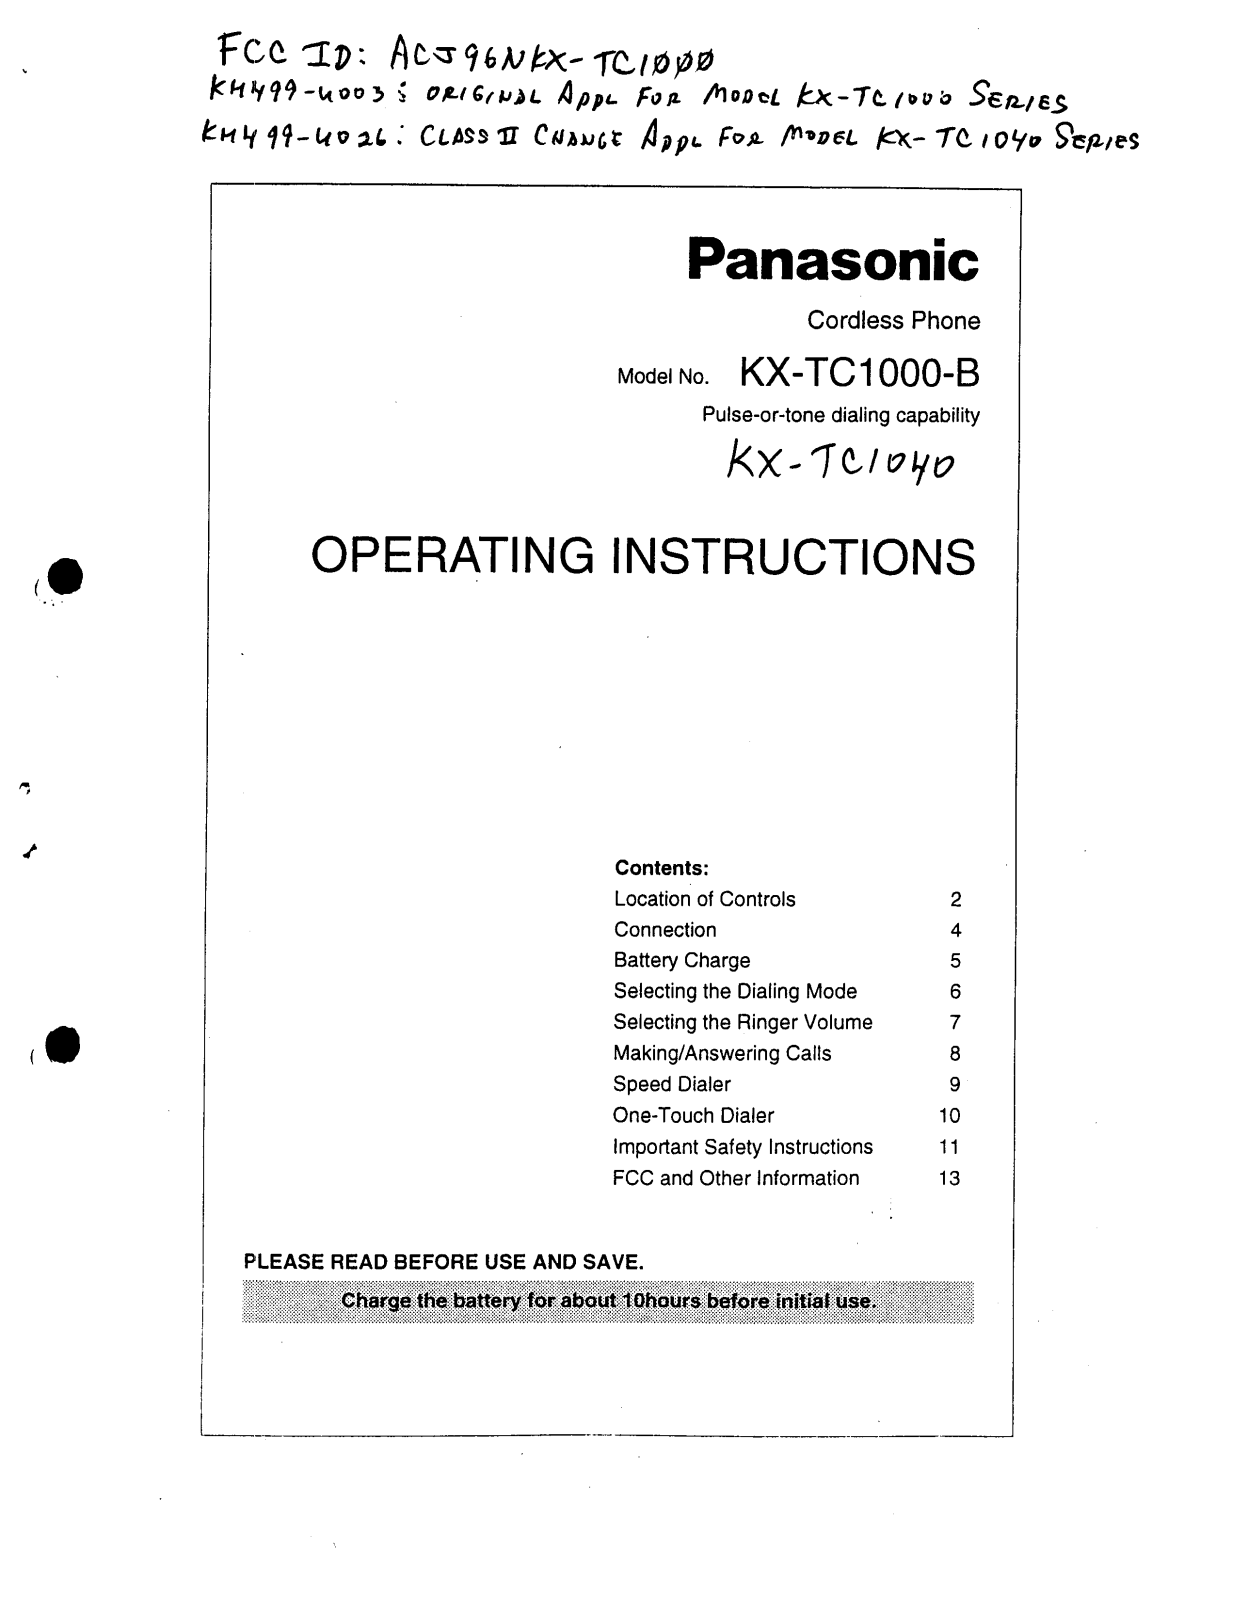 Panasonic 96NKX-TC1000 User Manual